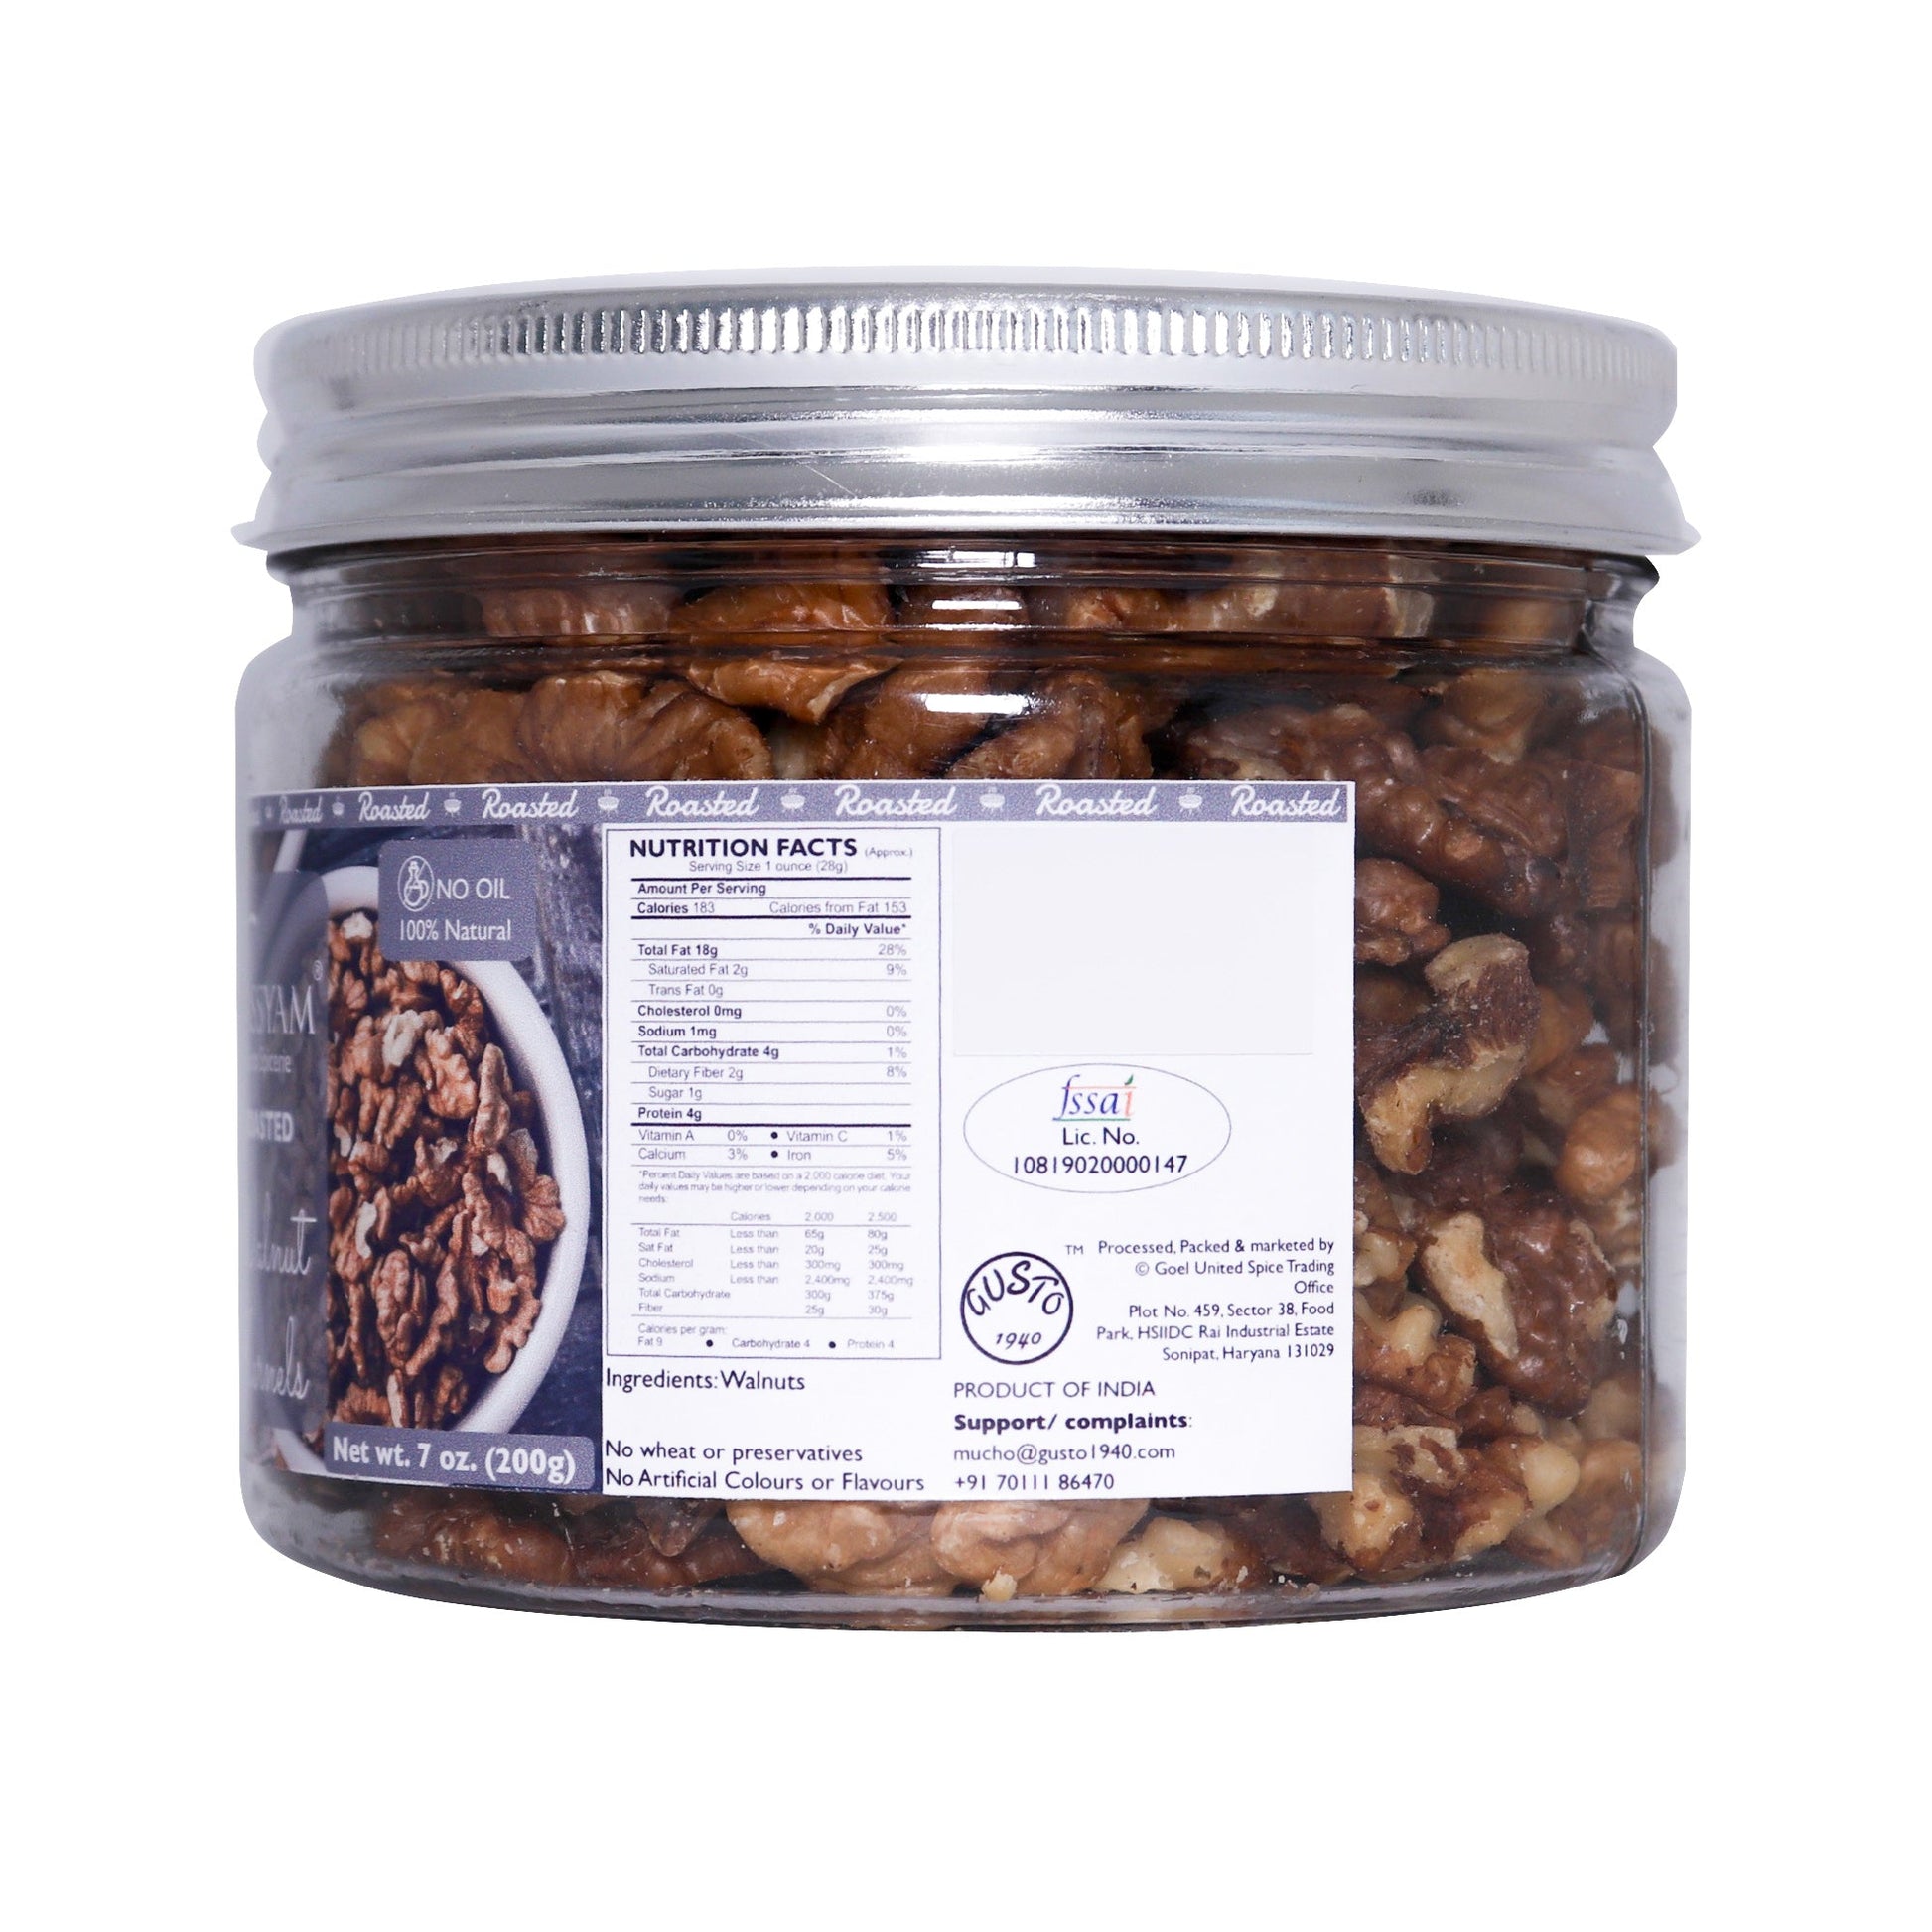 Roasted Walnut Halves 200g - Tassyam Organics